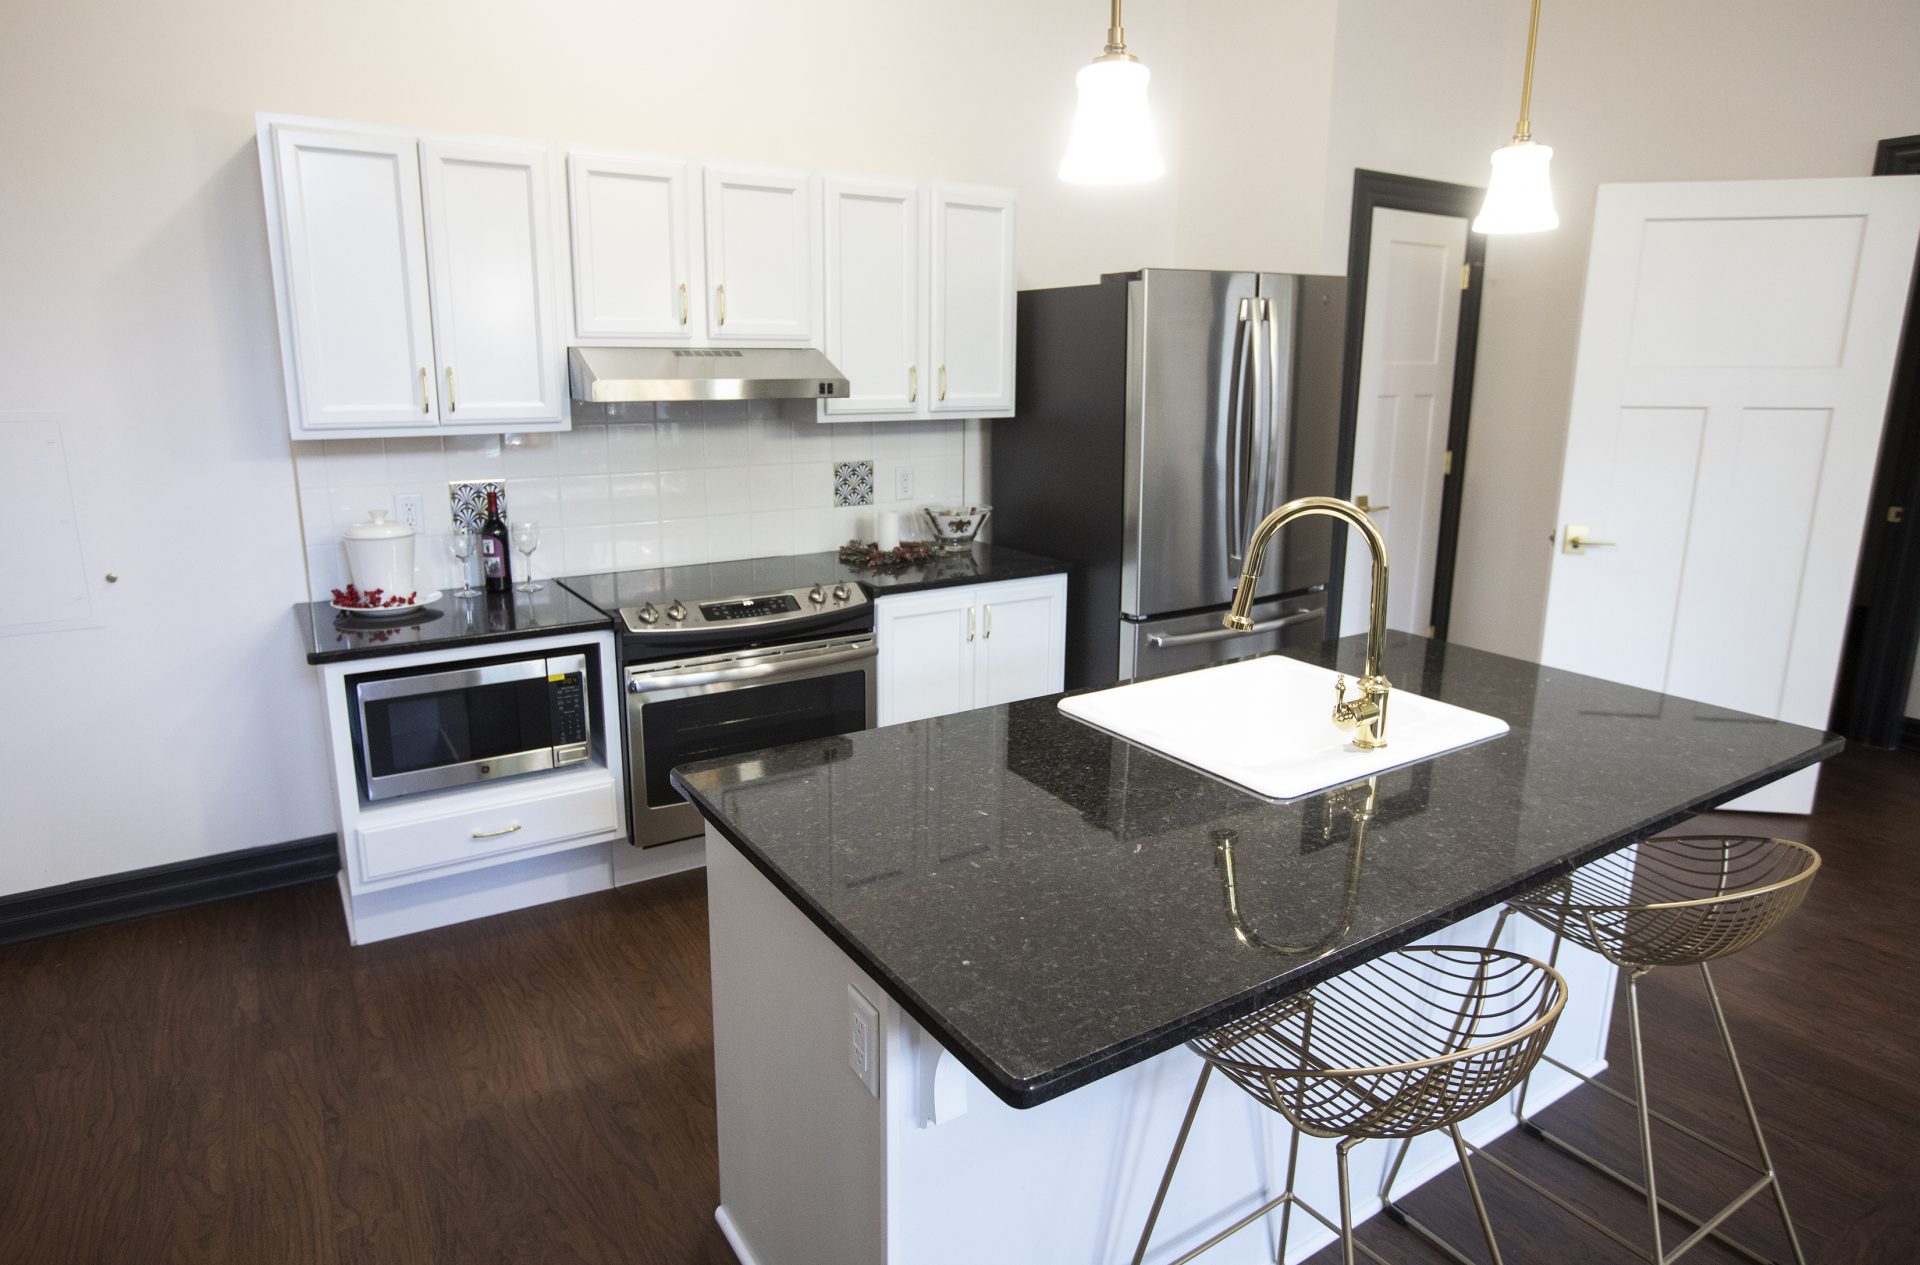 Kitchen in The Fox on Washington Apartments in Harrisburg. Dec. 20, 2019.